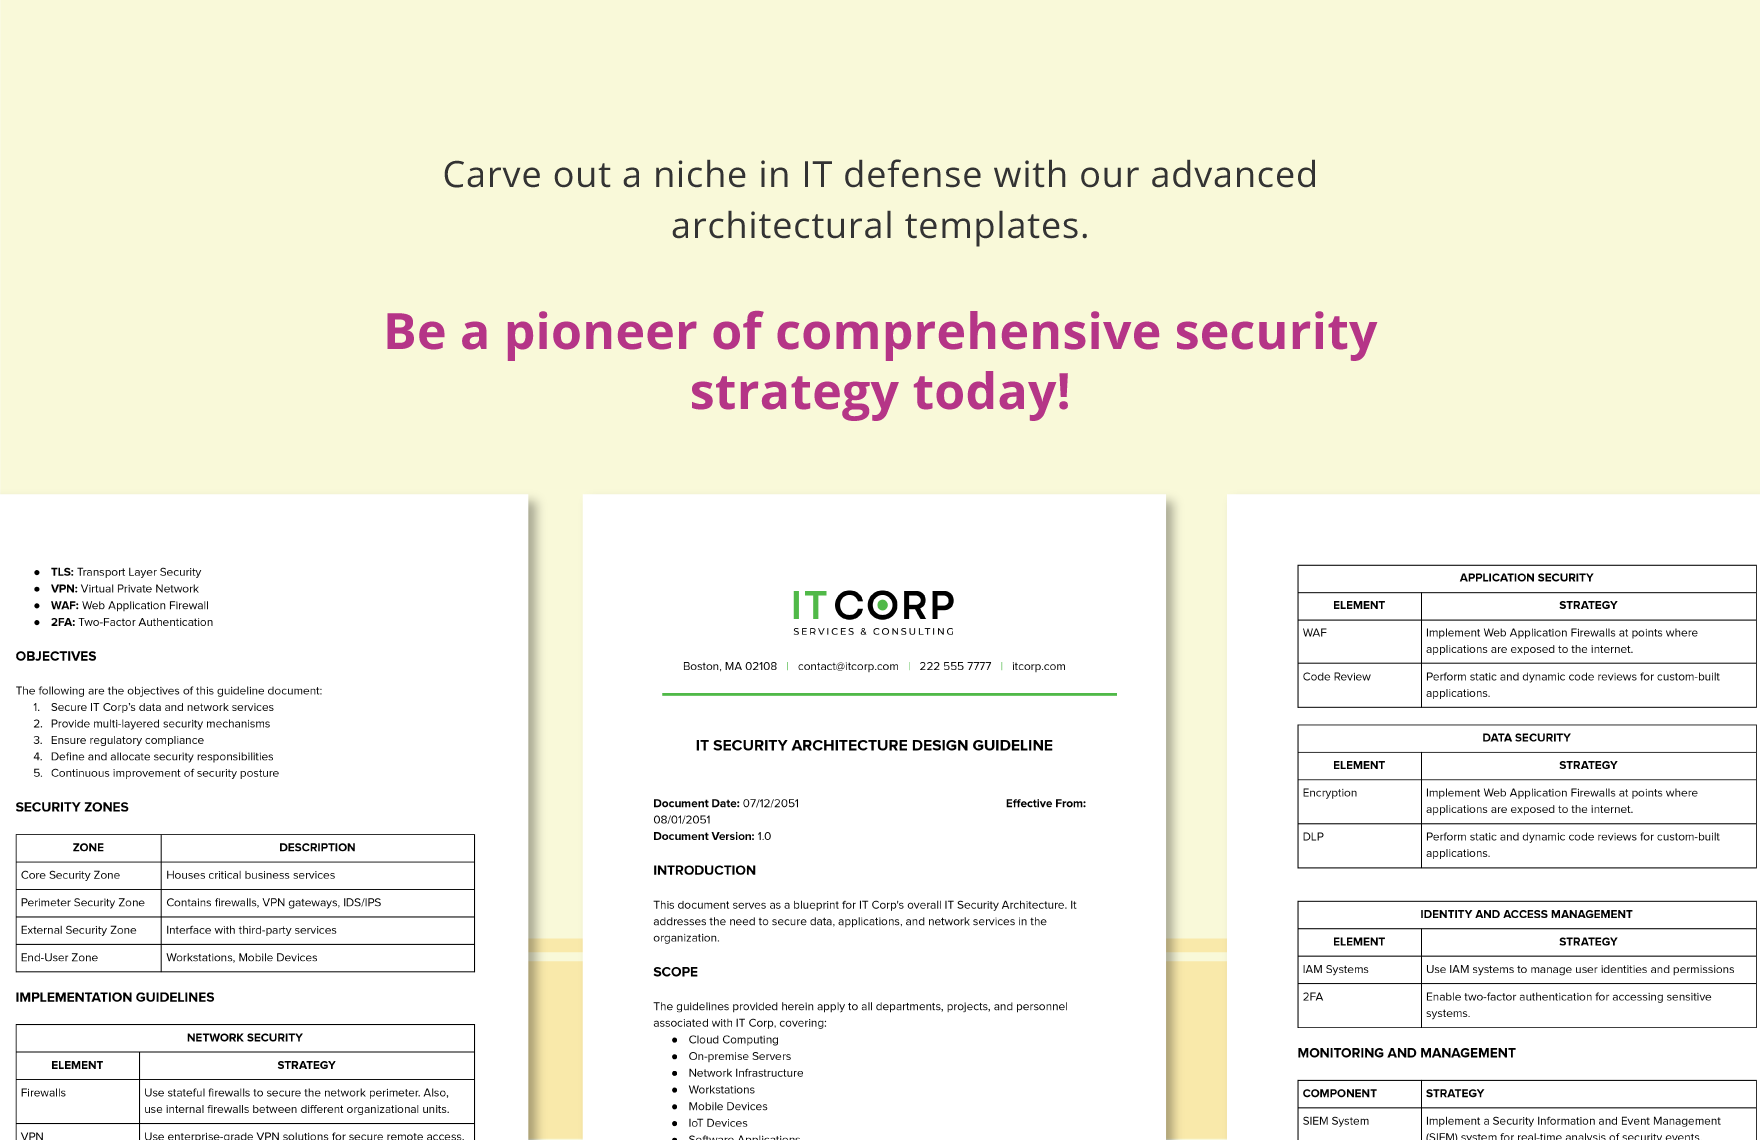 IT Security Architecture Design Guideline